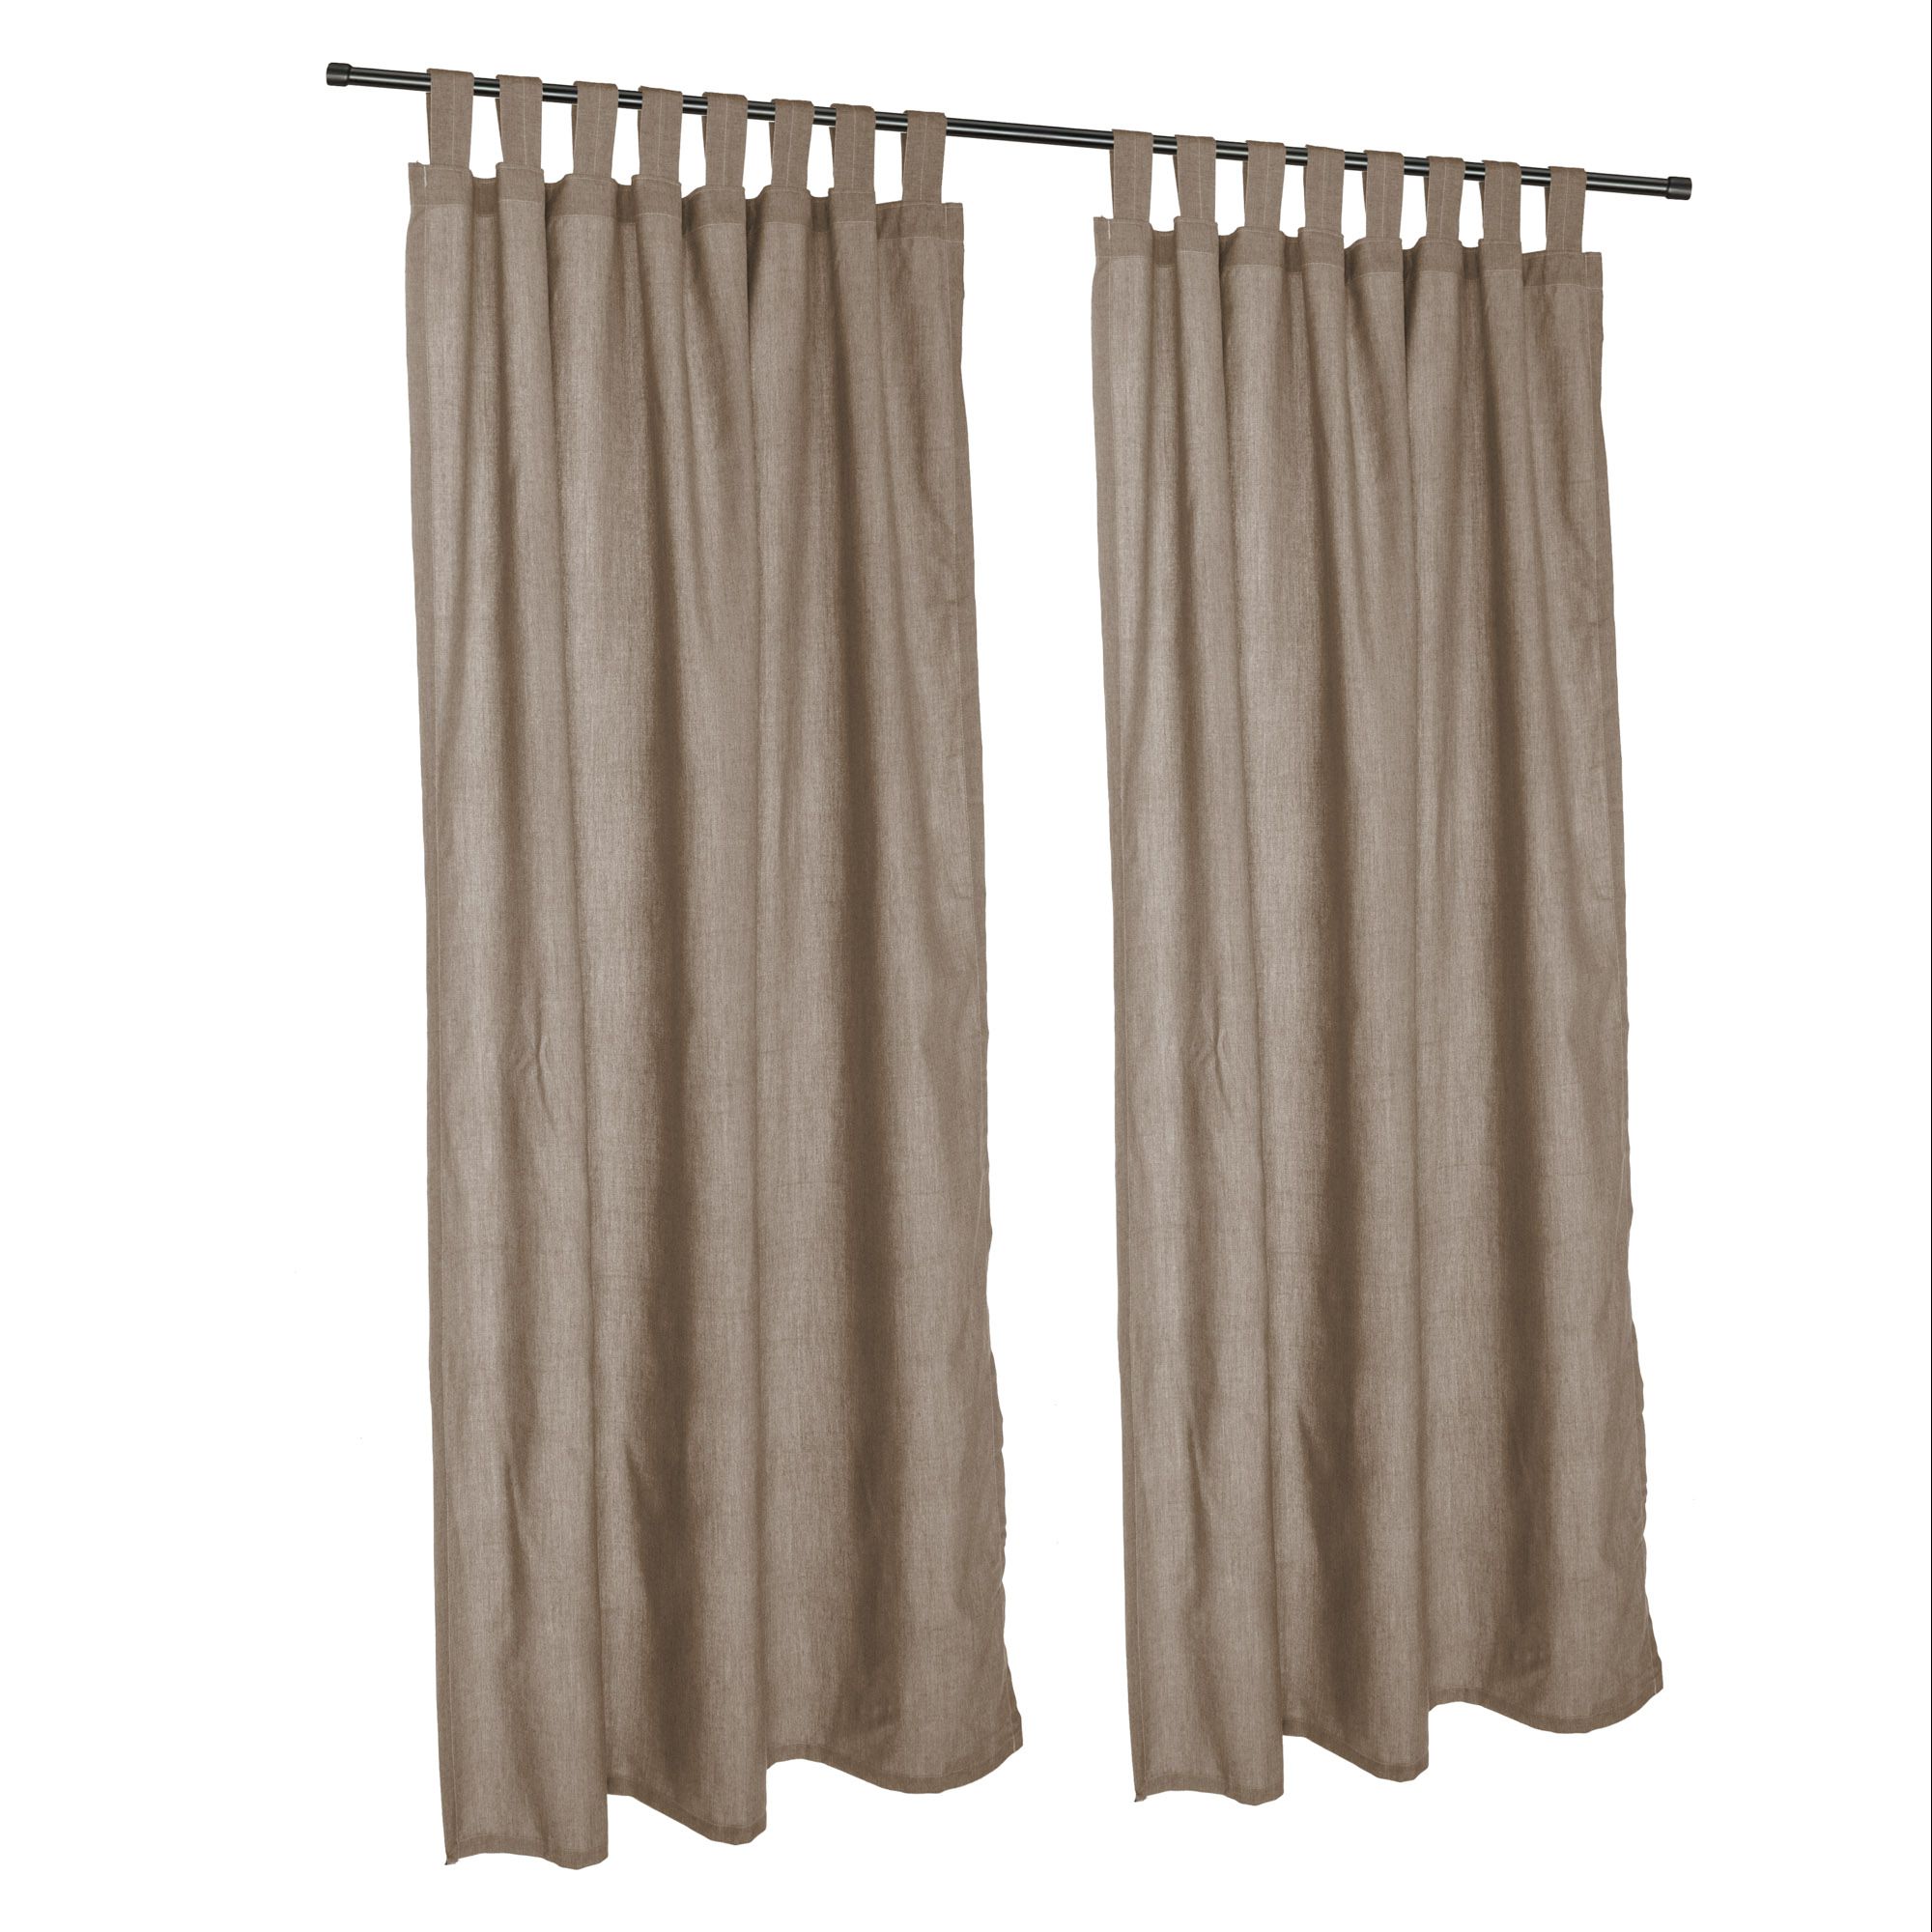 Antique Beige Grommet Sunbrella Outdoor Curtains